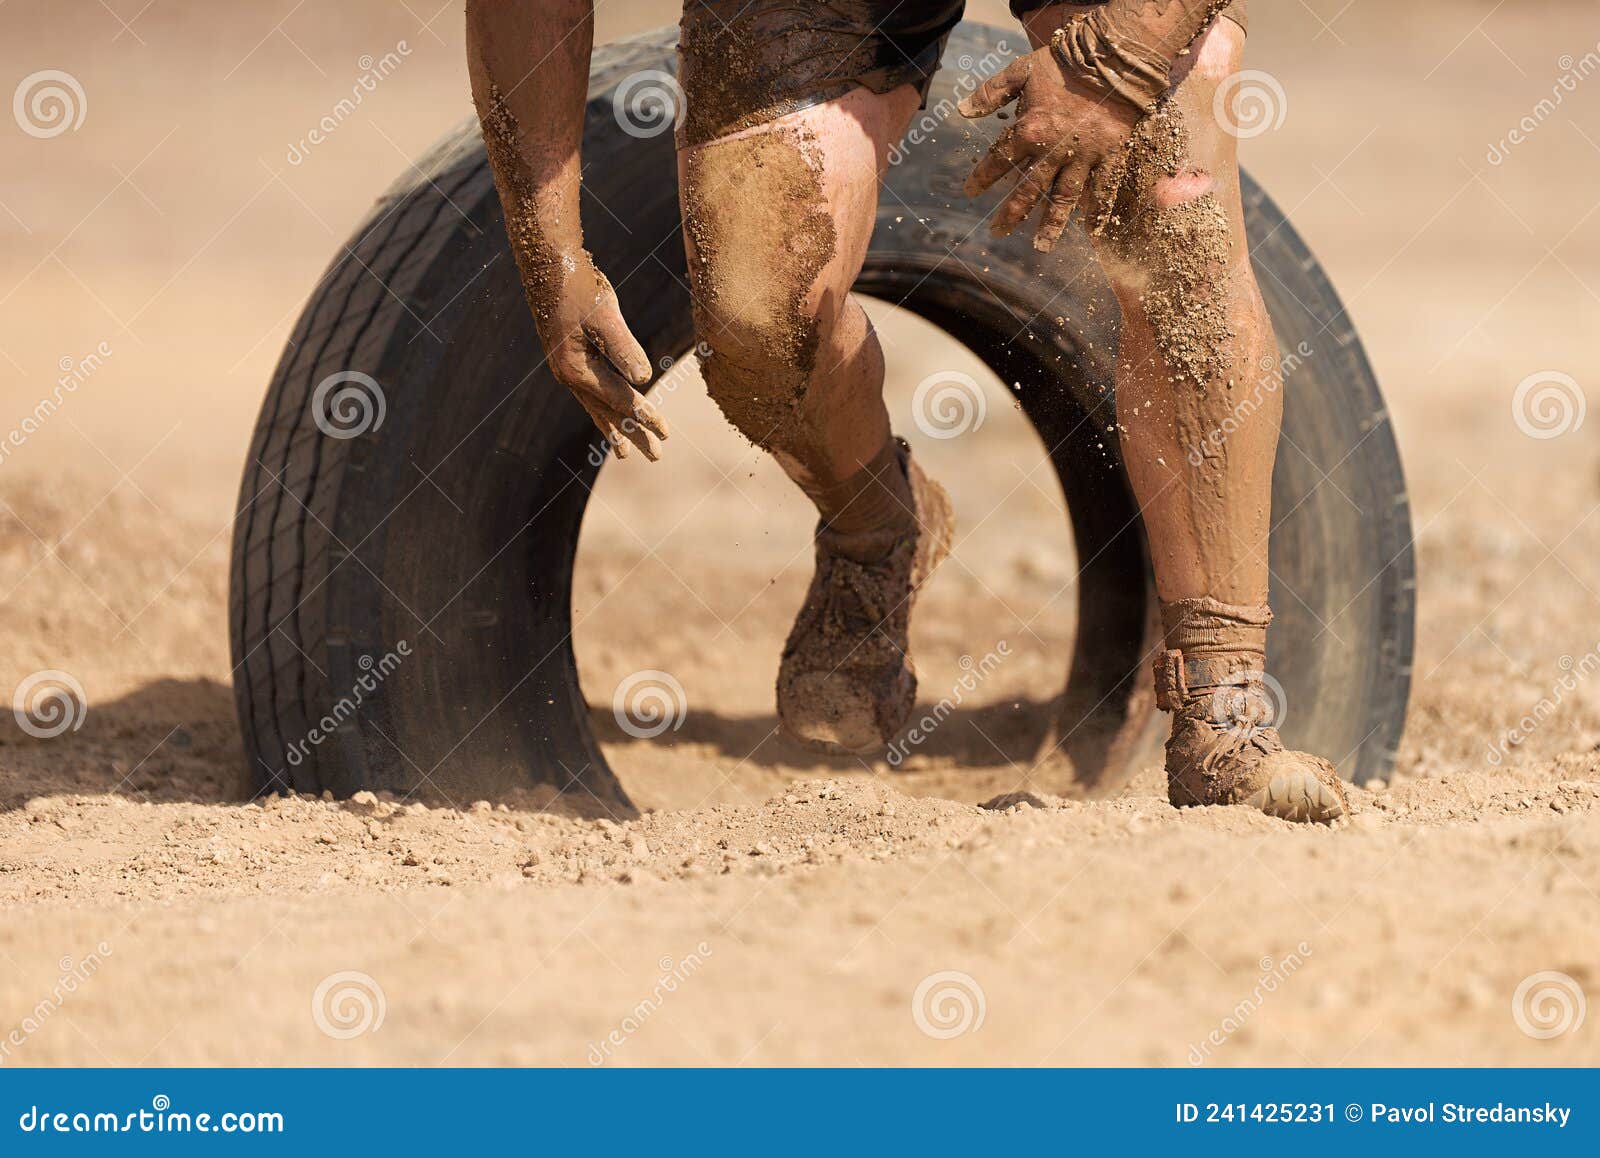 mud race runners